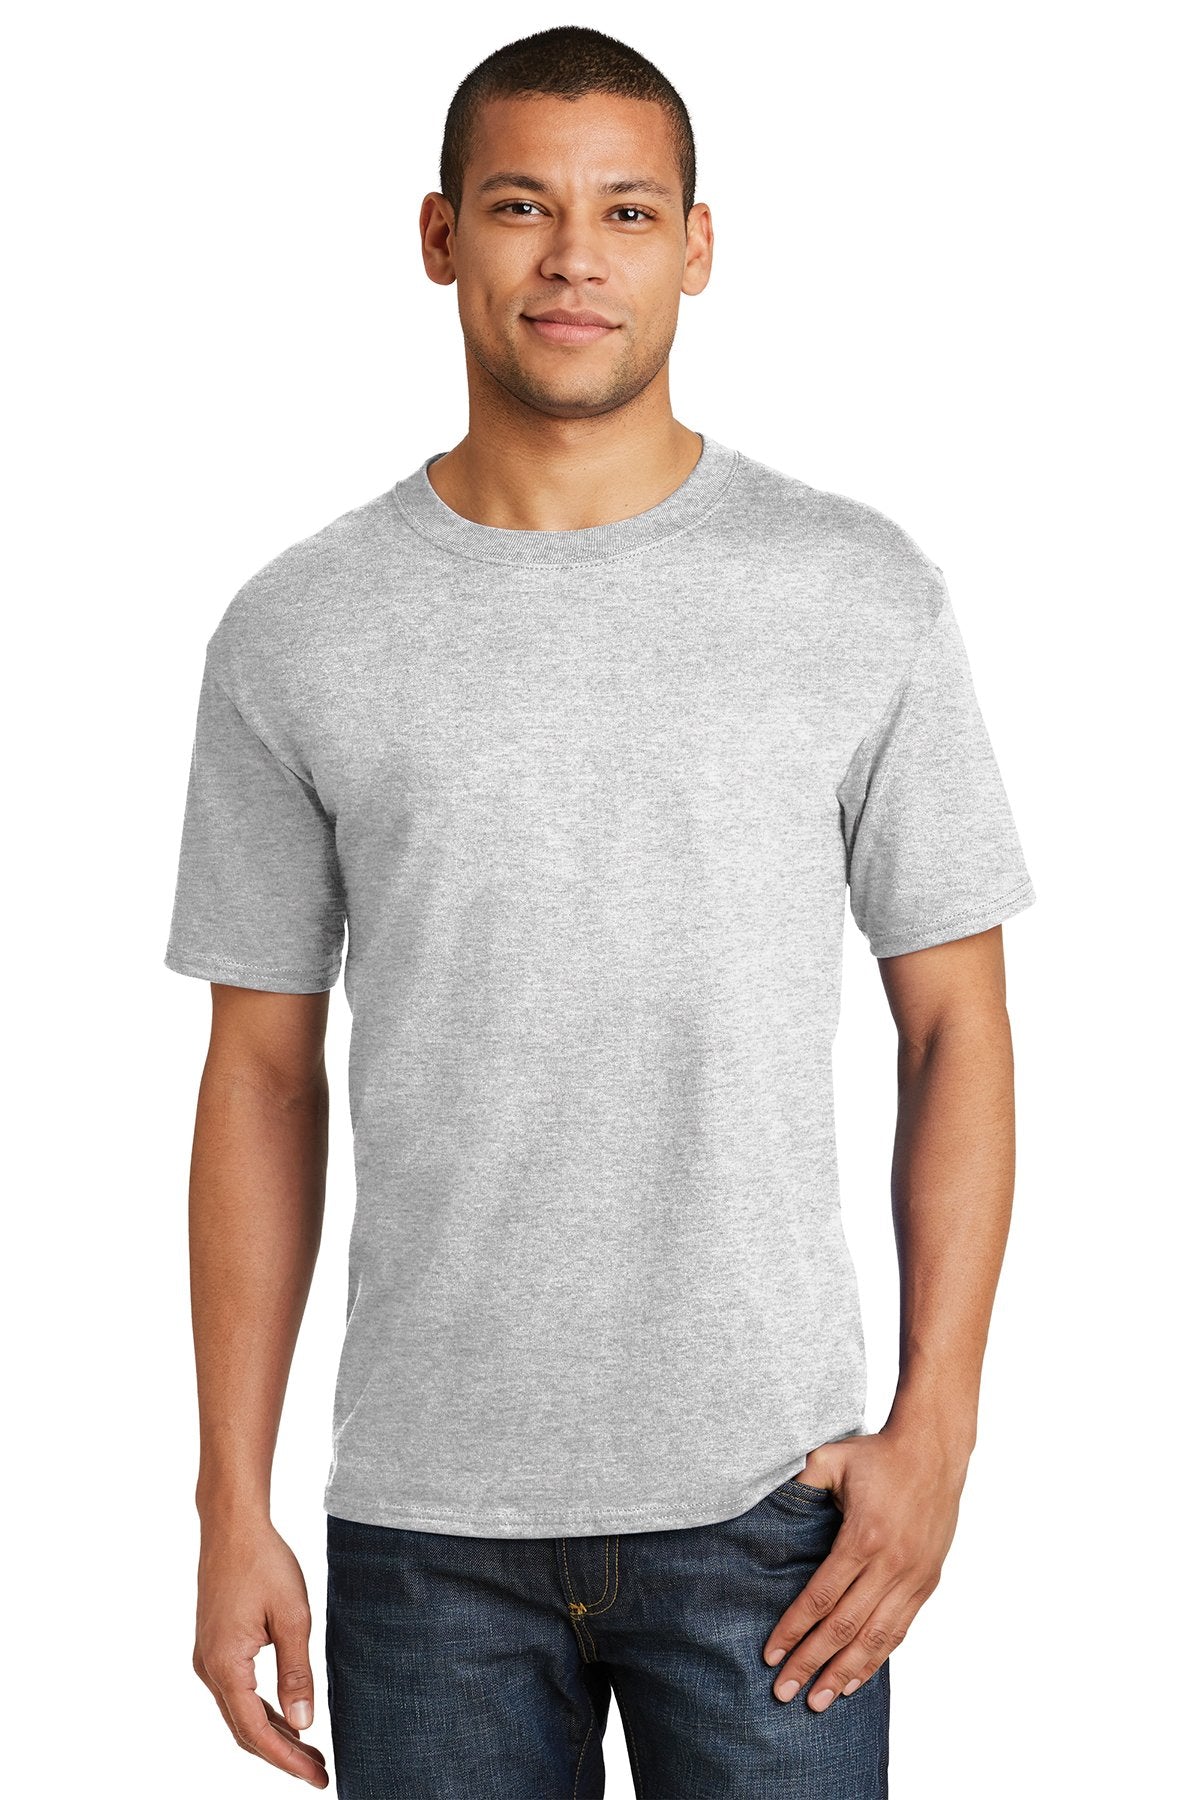 hanes beefy cotton t shirt 5180 ash